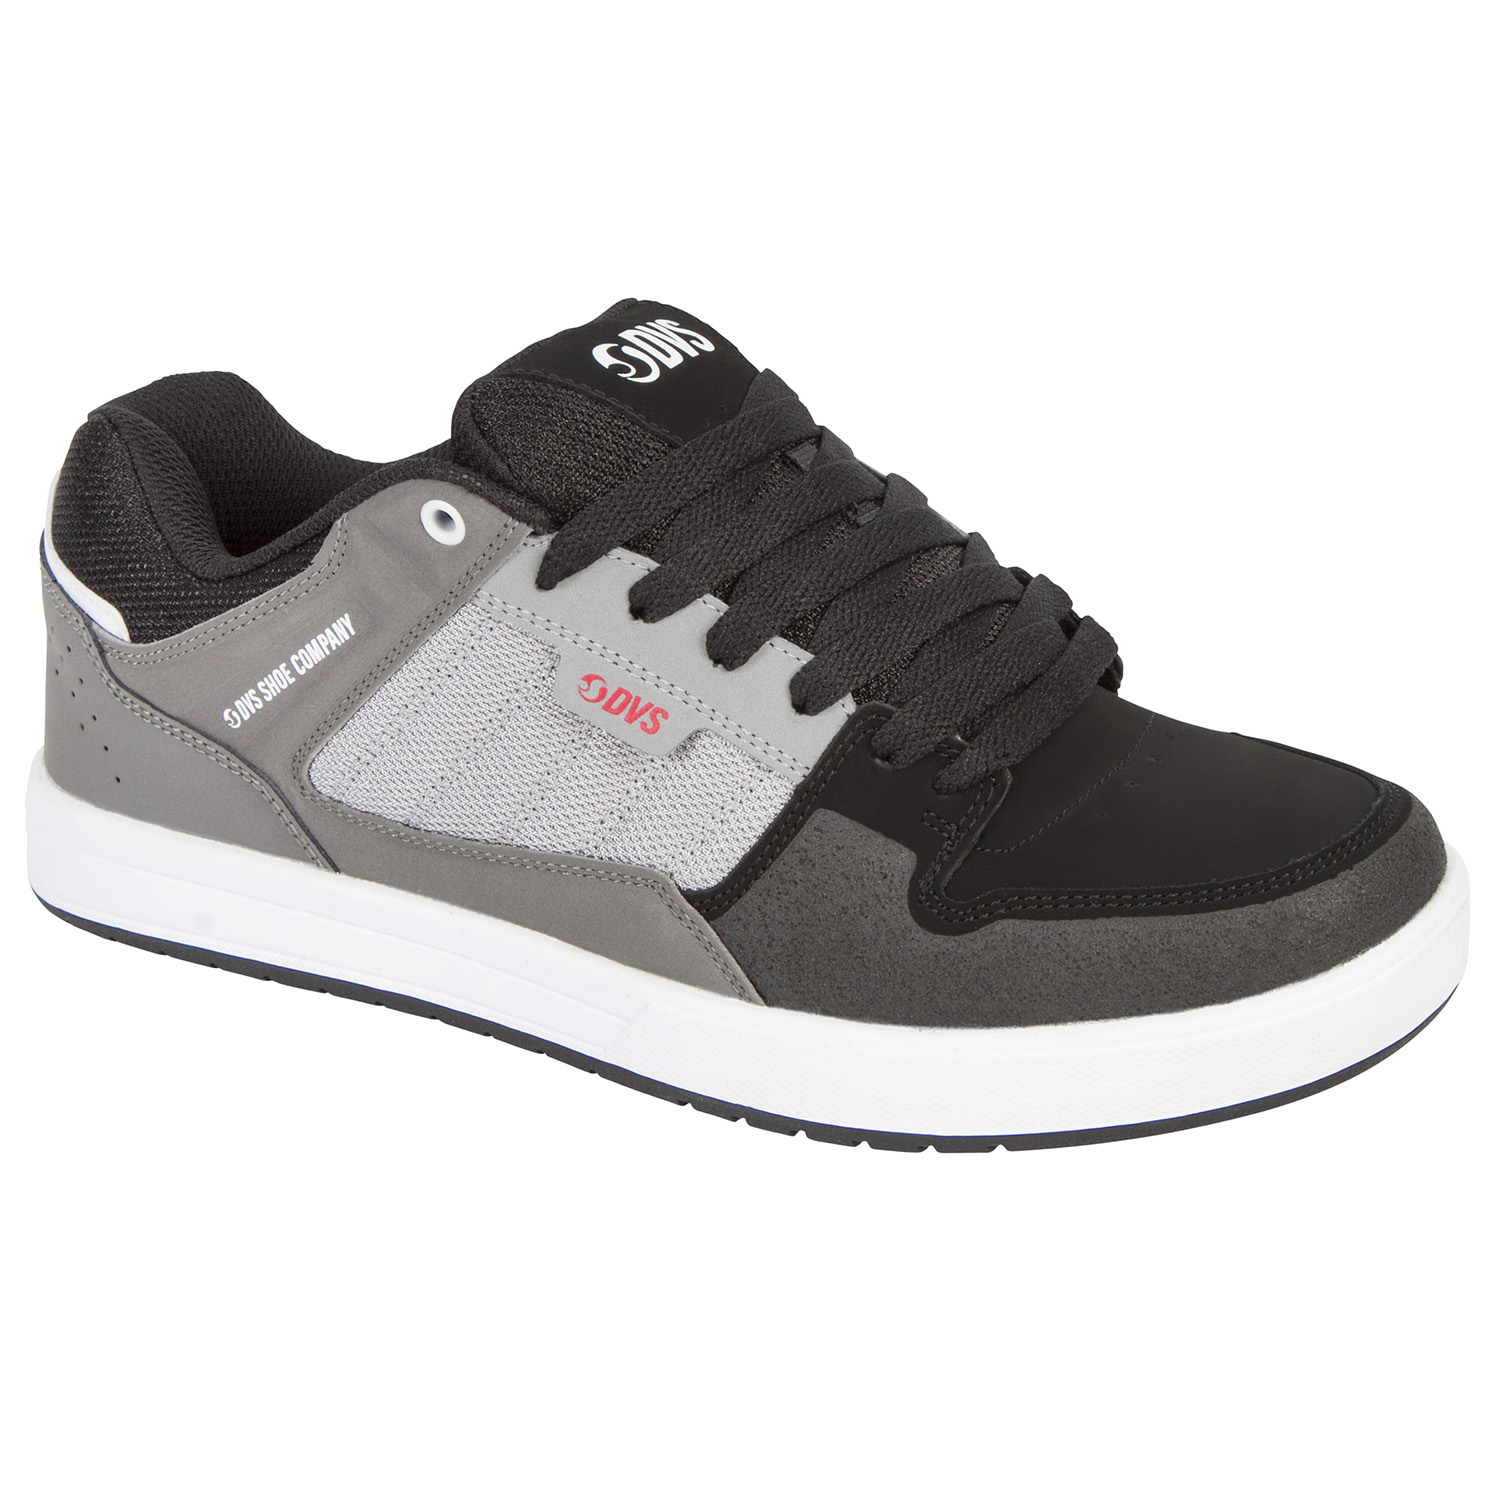 DVS Shoes Portal Charcoal/Grey/Leather Nubuck